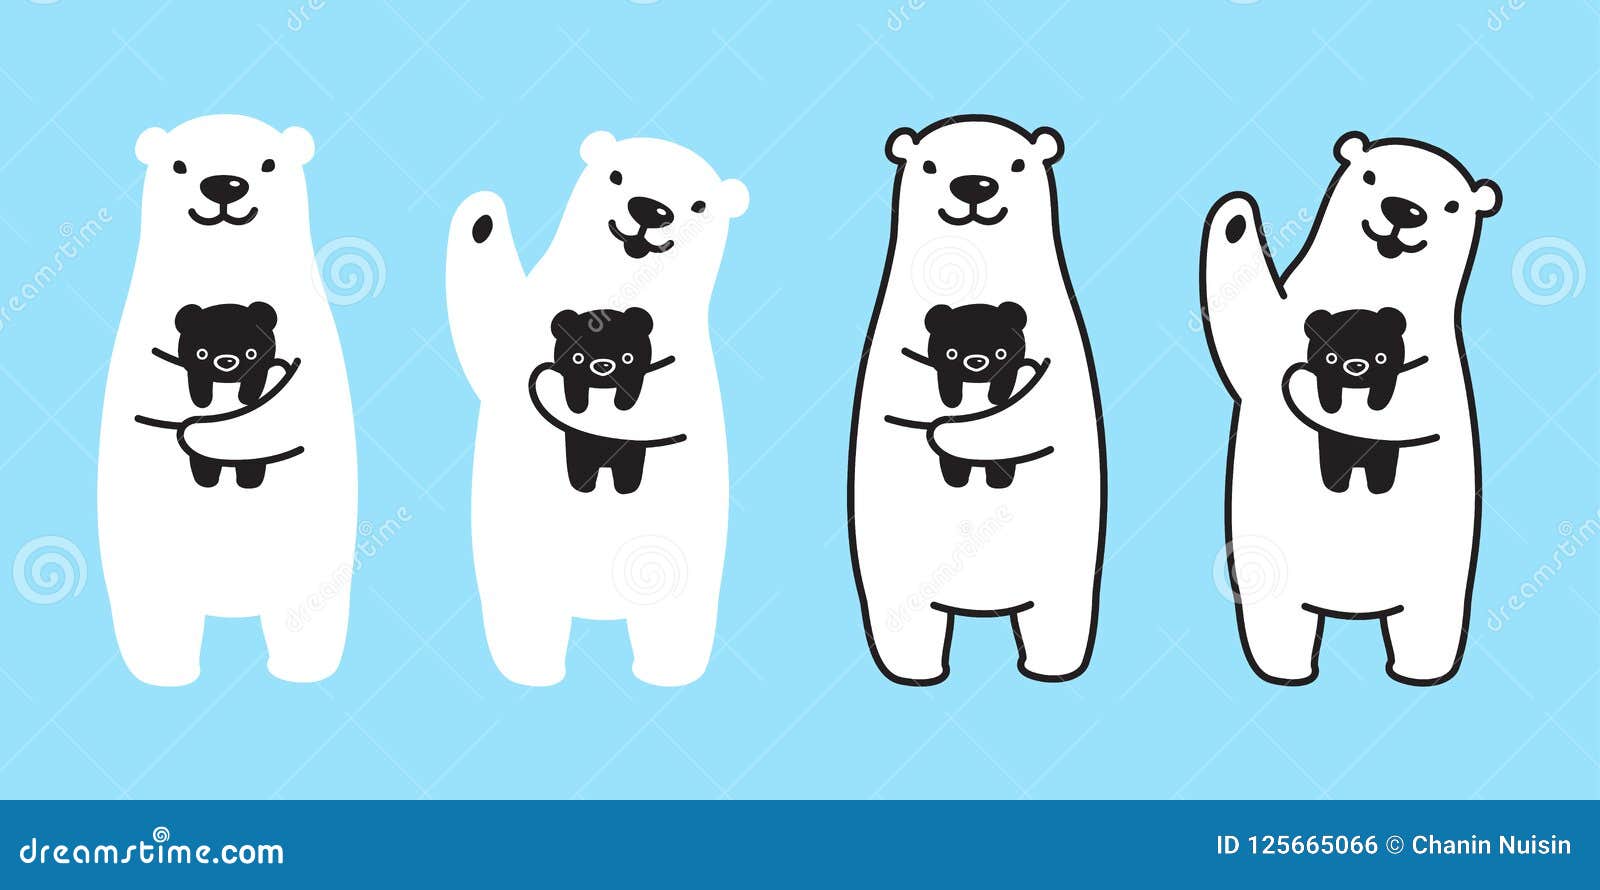 Bear Vector Polar Bear Character Cartoon Icon Panda Logo Kid Illustration  Doodle Stock Illustration - Illustration of snow, polar: 125665066